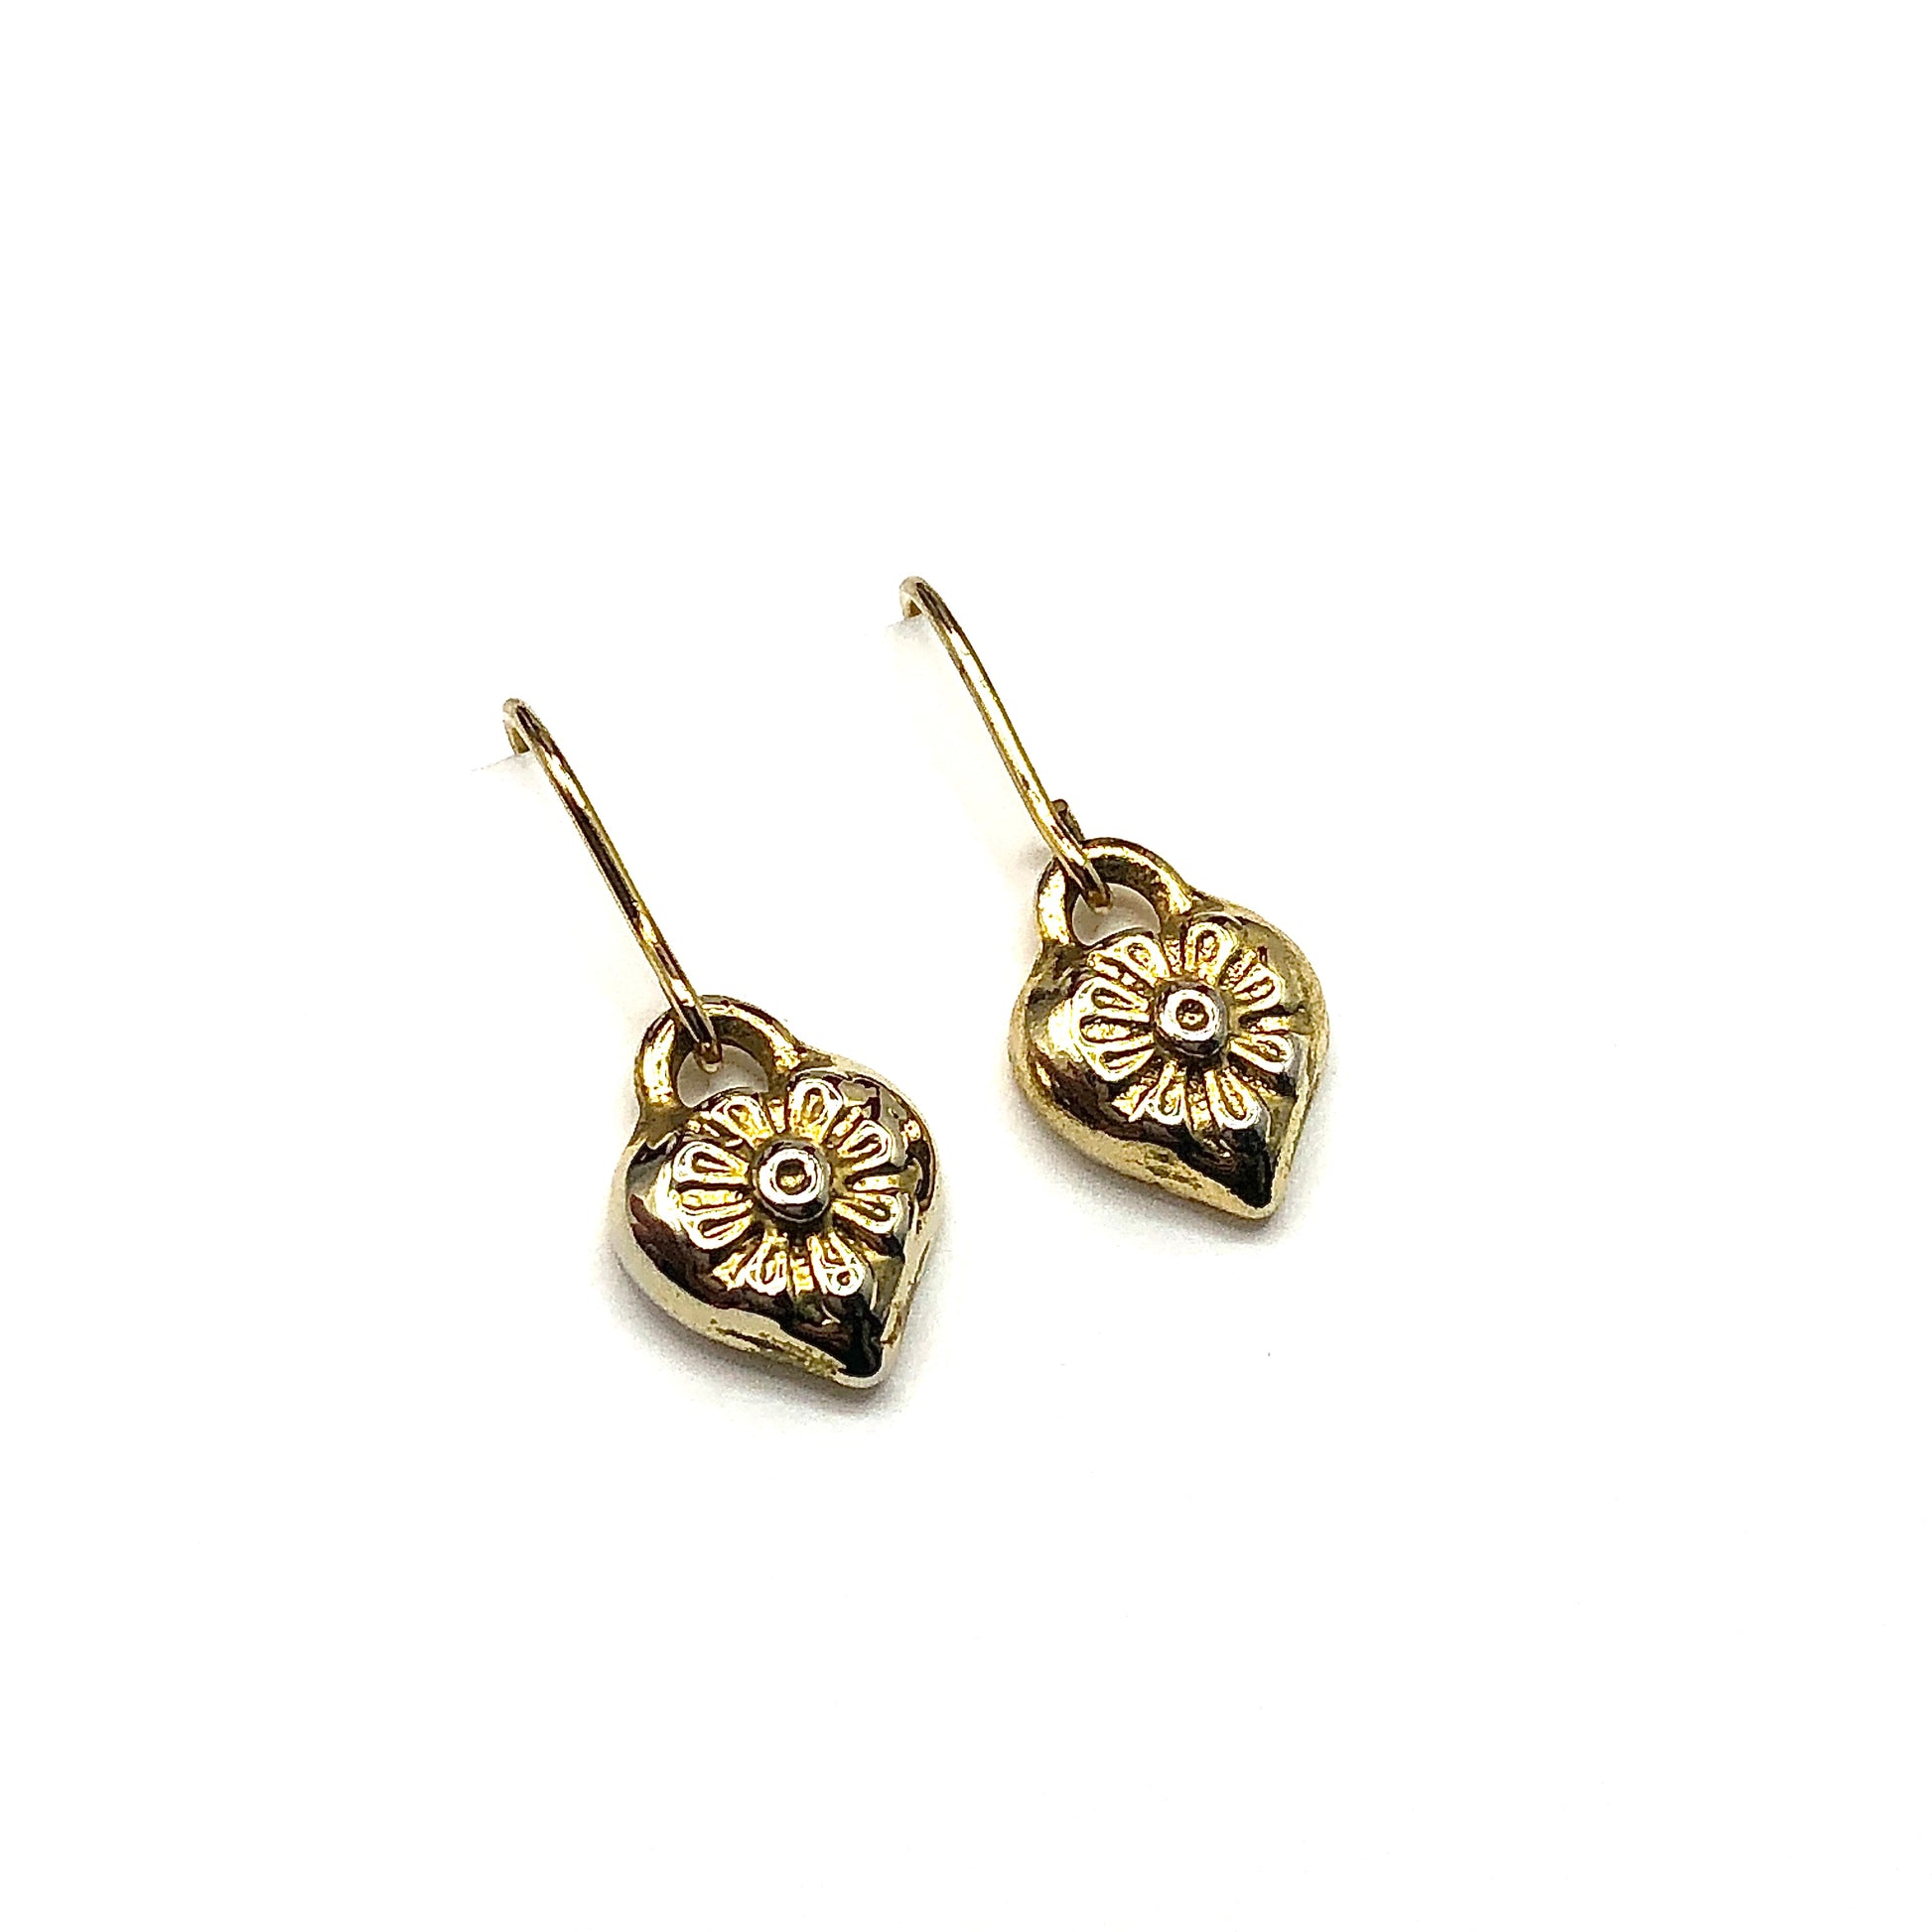 Earrings Womens Cute Small Gold Floral Heart Short Drop Earrings